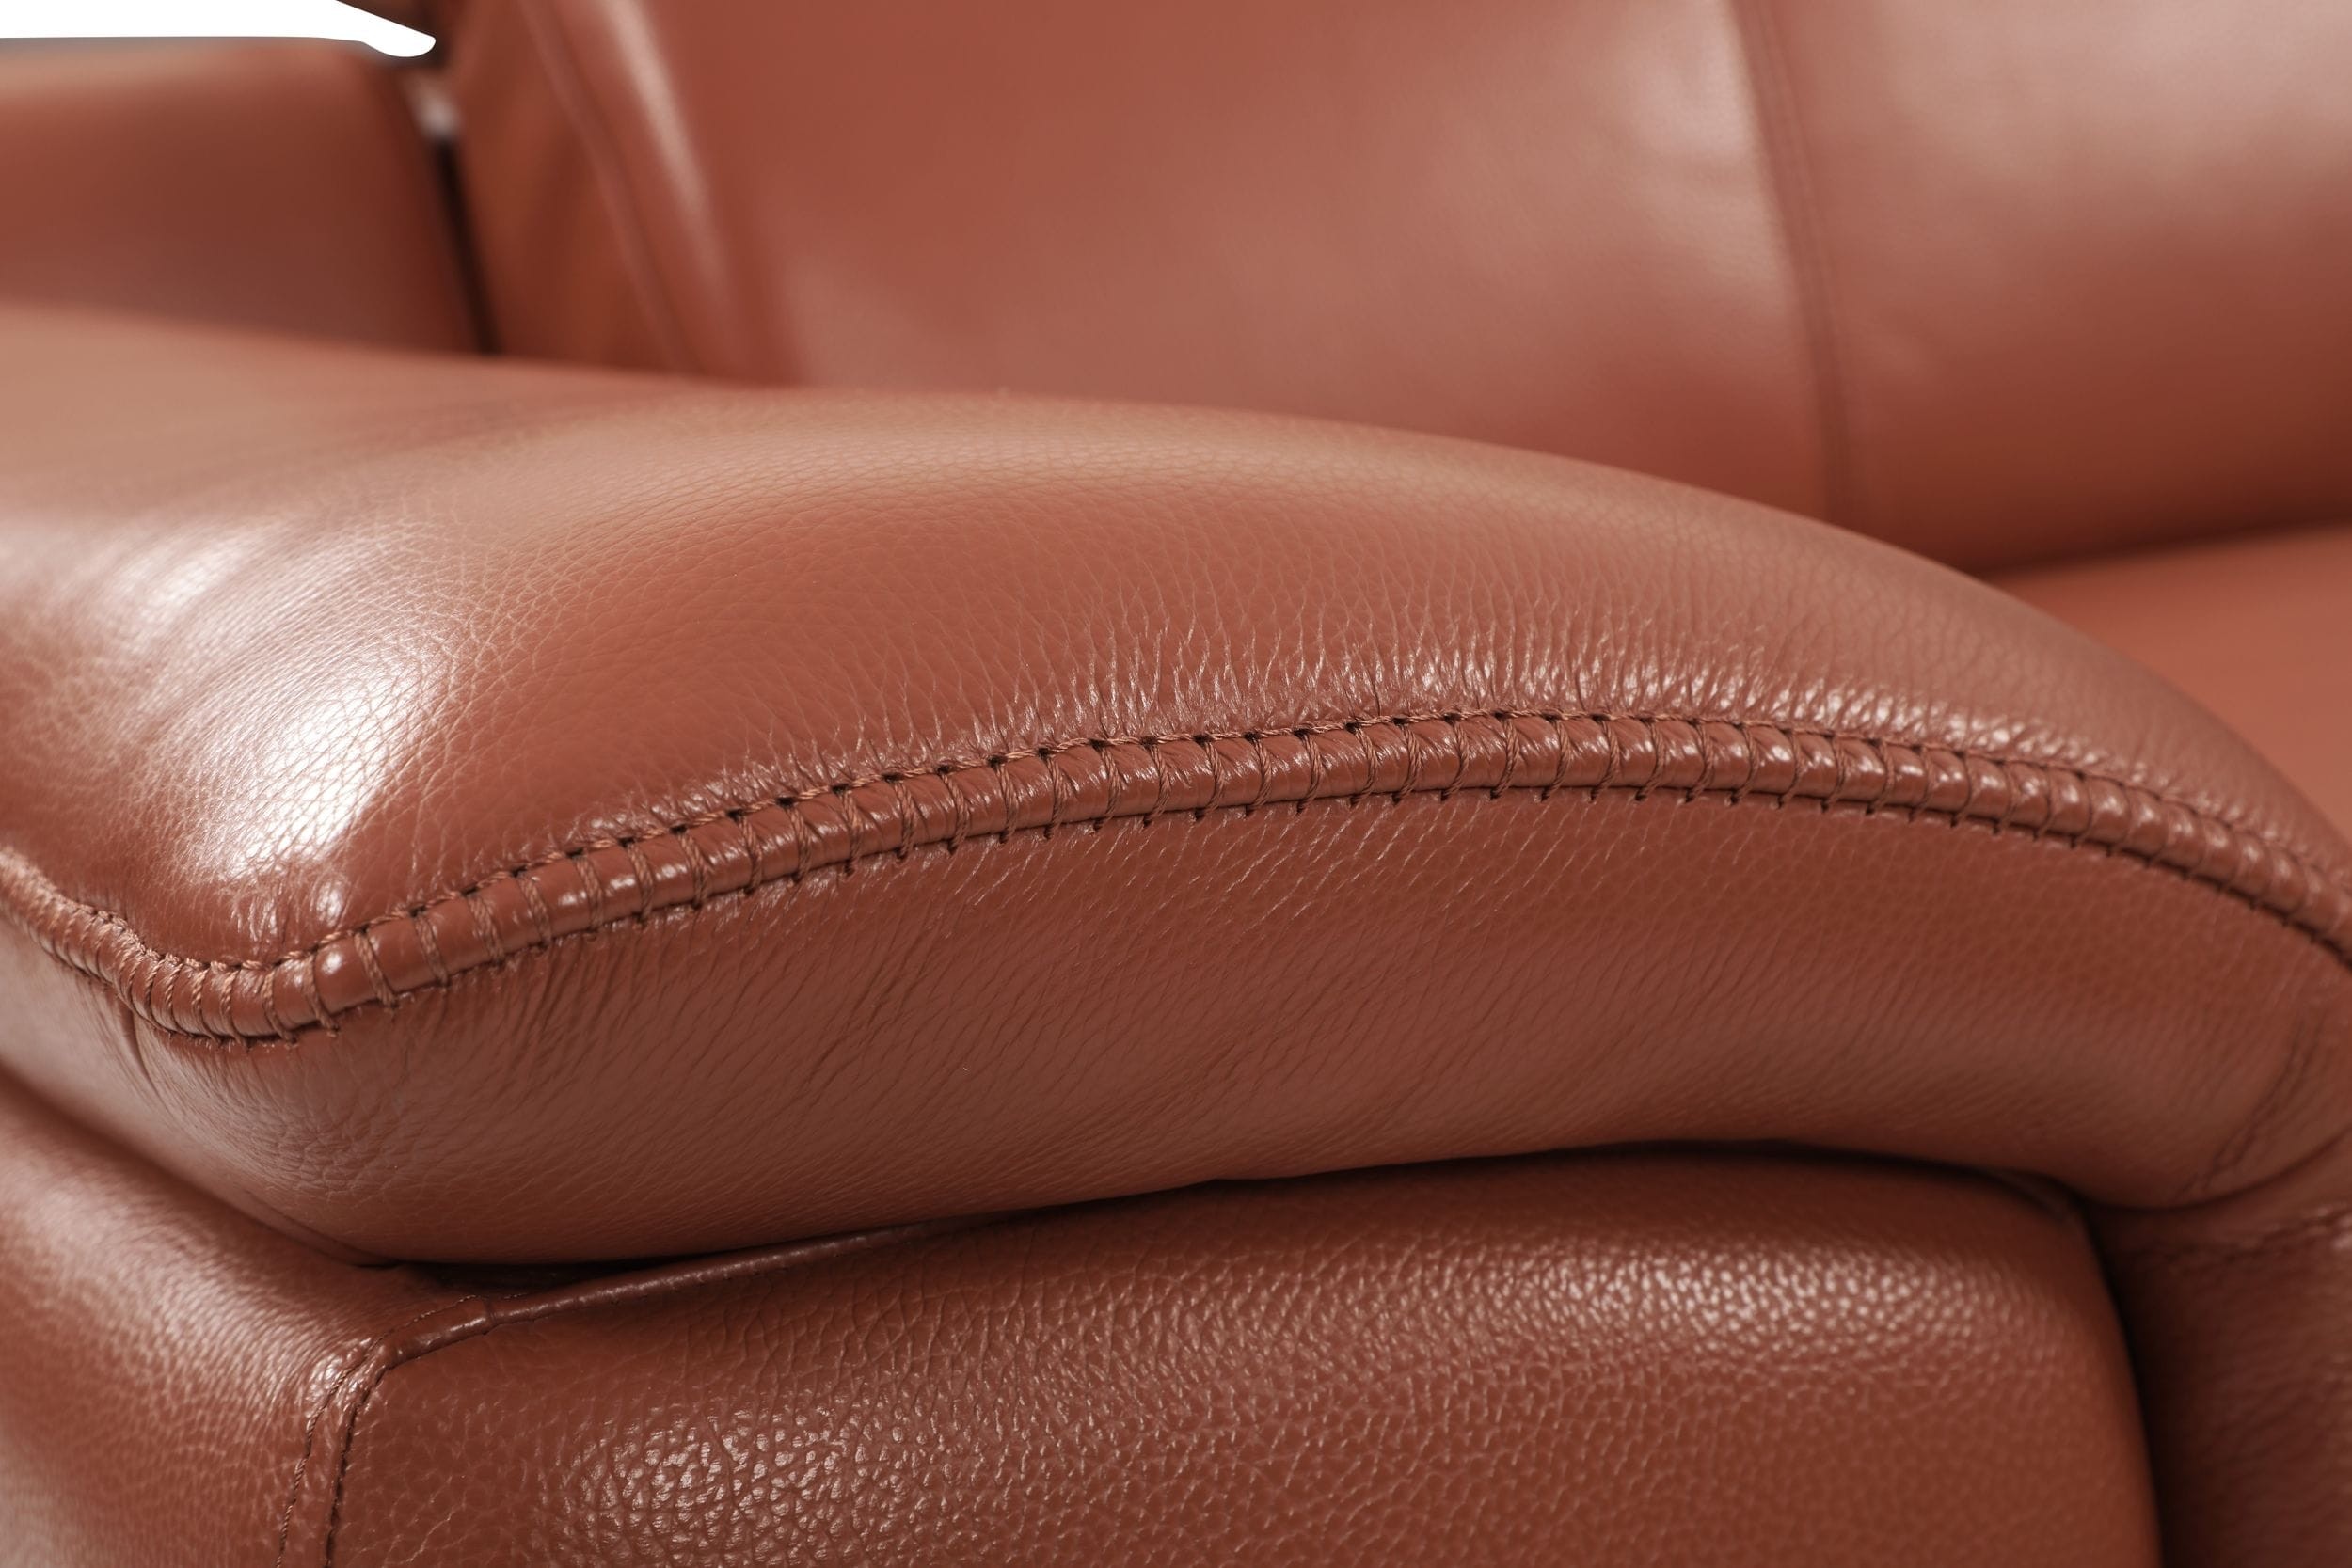 jedda camel leather sofa